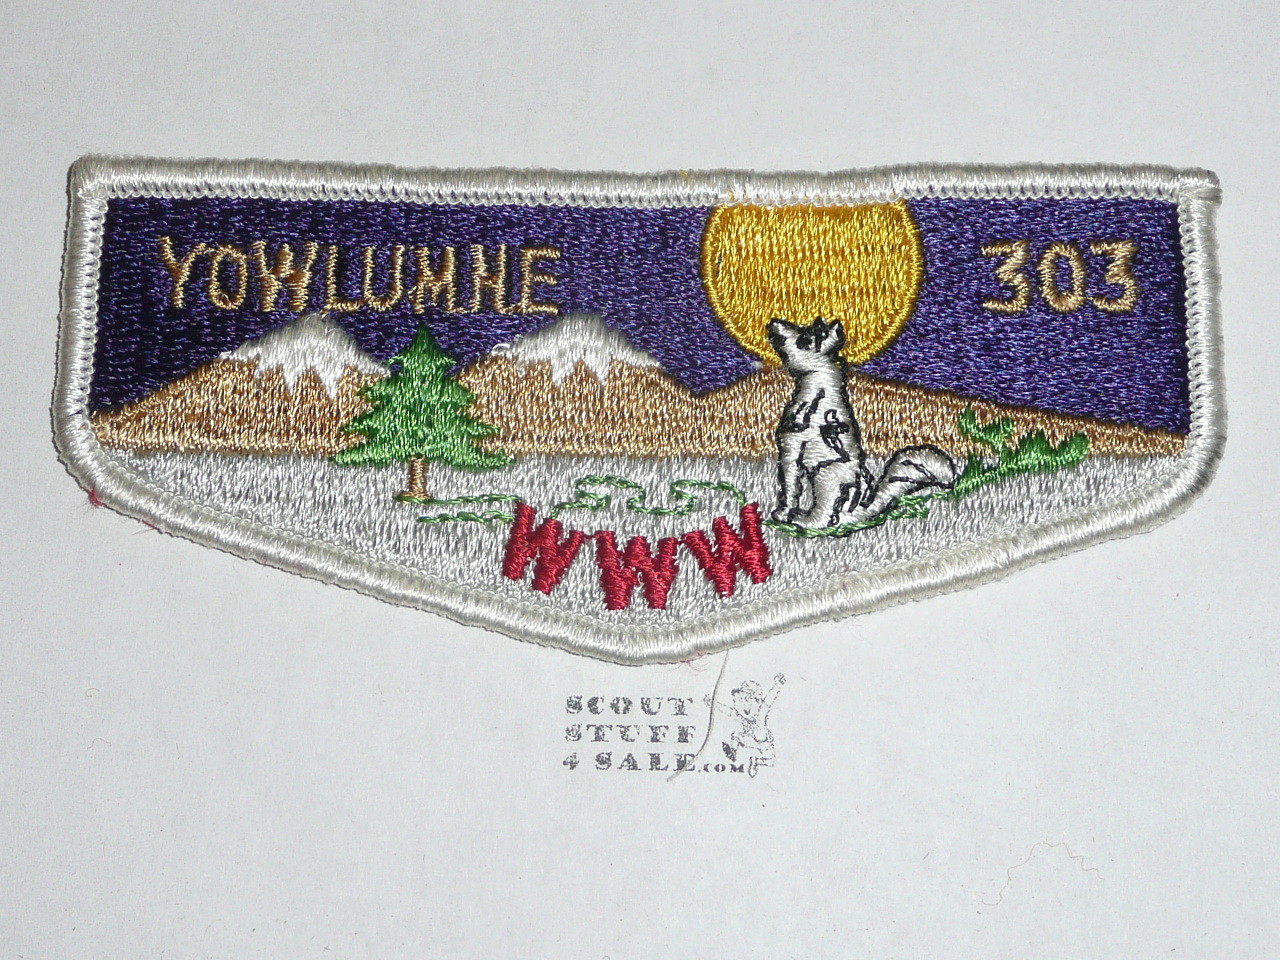 Order of the Arrow Lodge #303 Yowlumne s2 Flap Patch